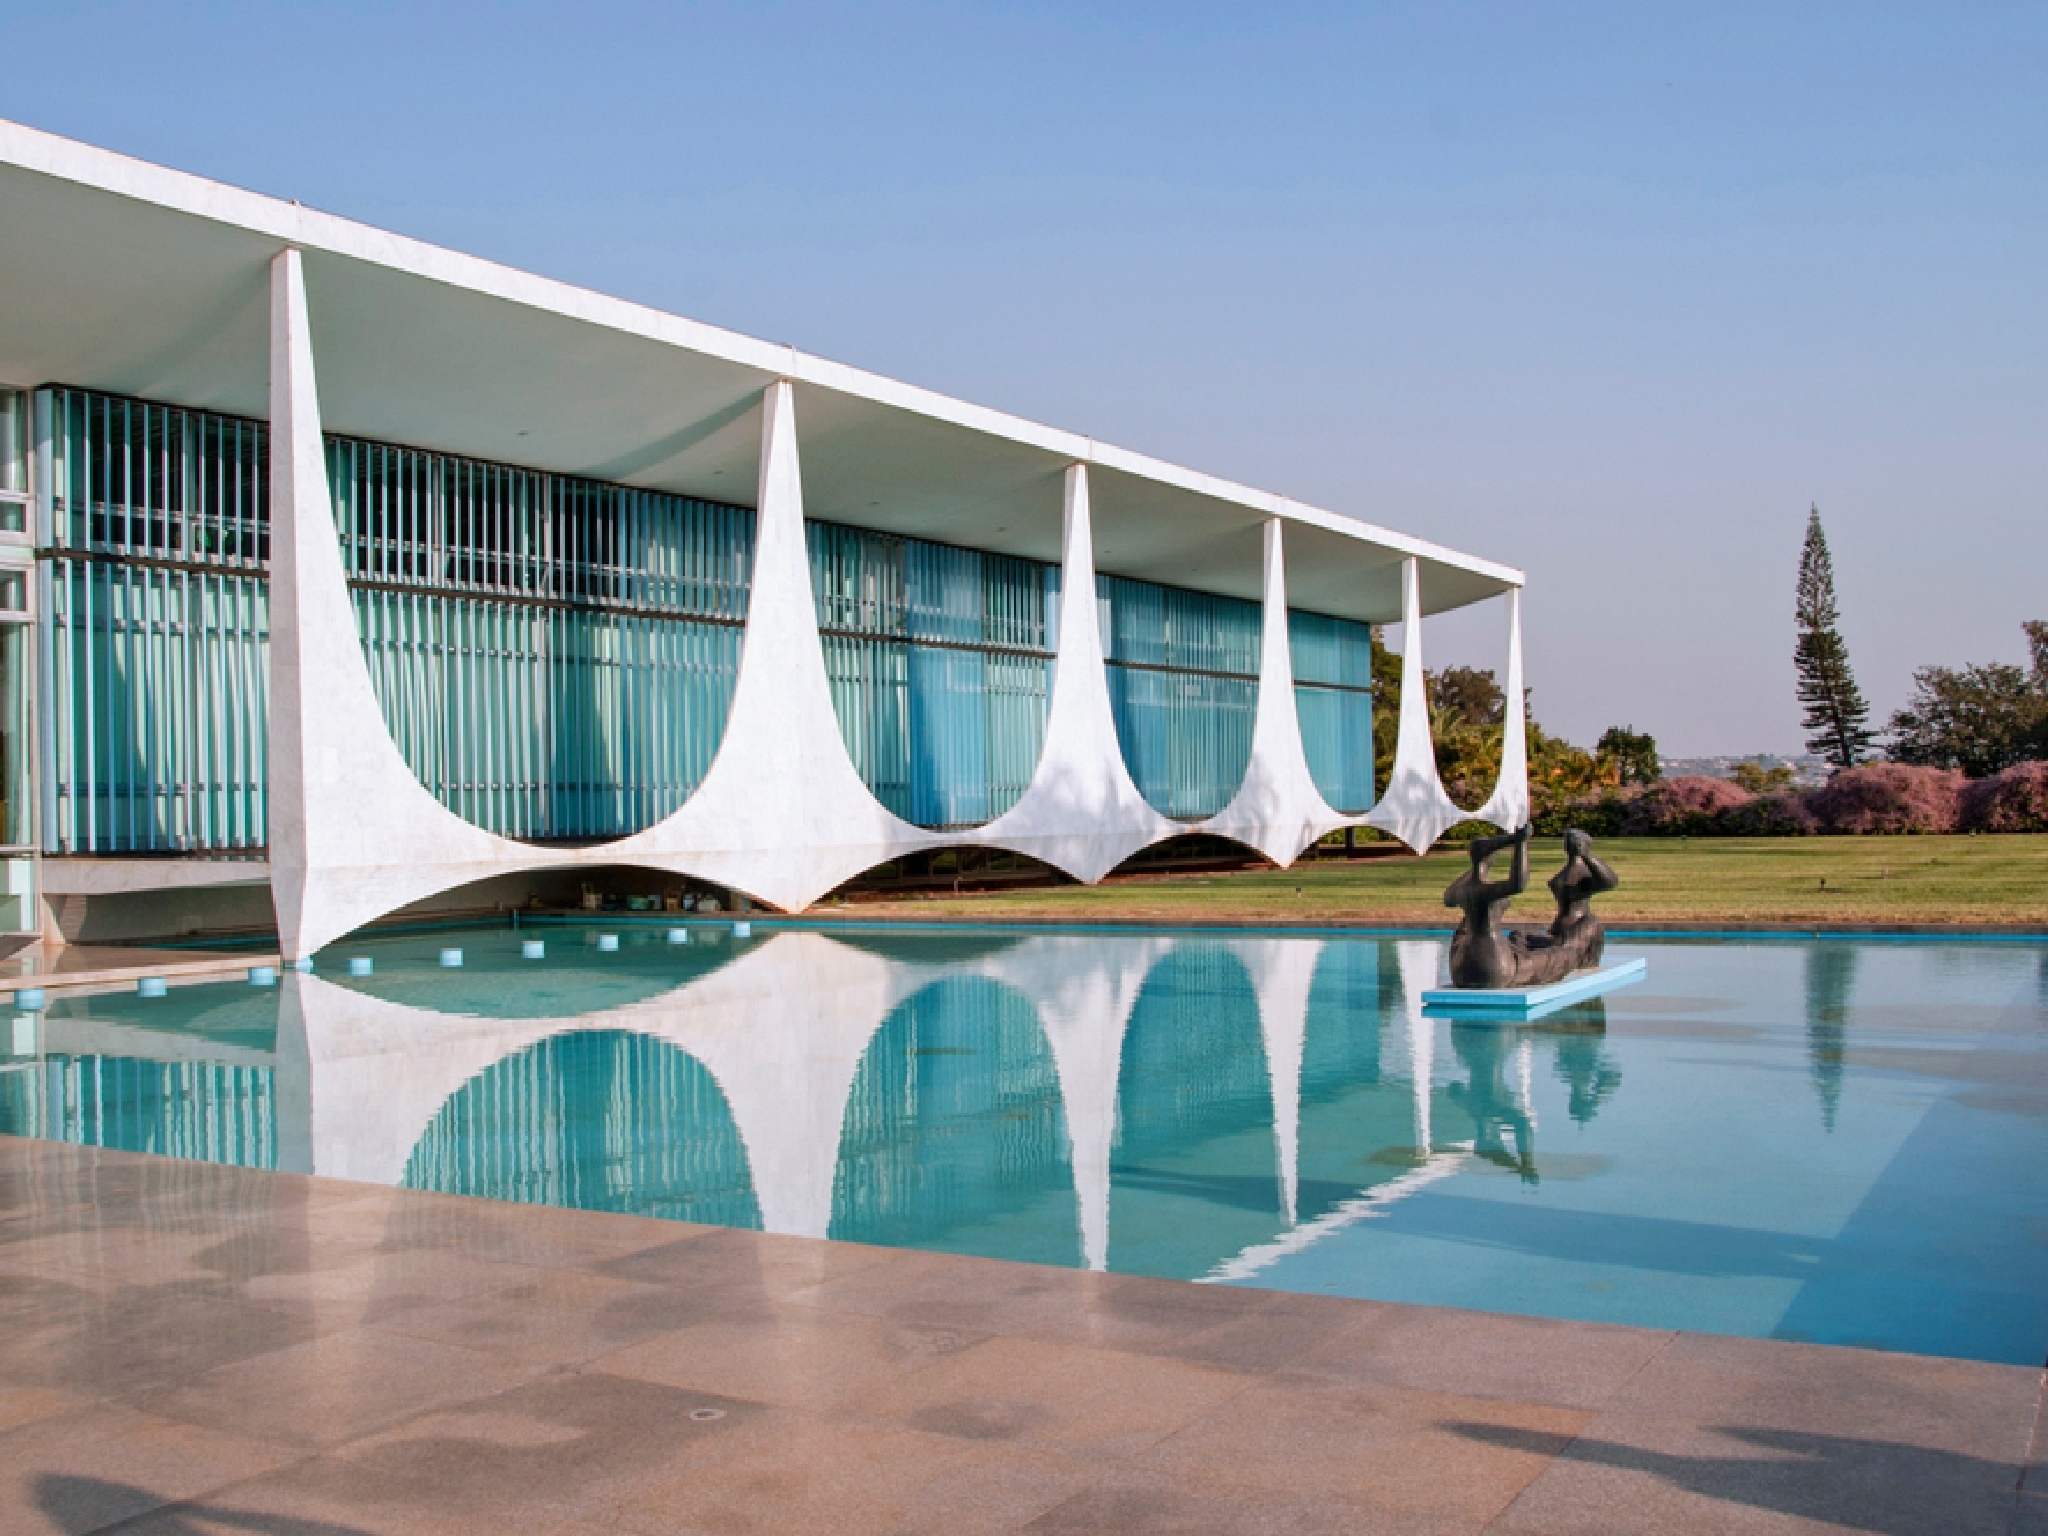 Take a tour of Brasília, Brazil’s majestic modernist masterpiece